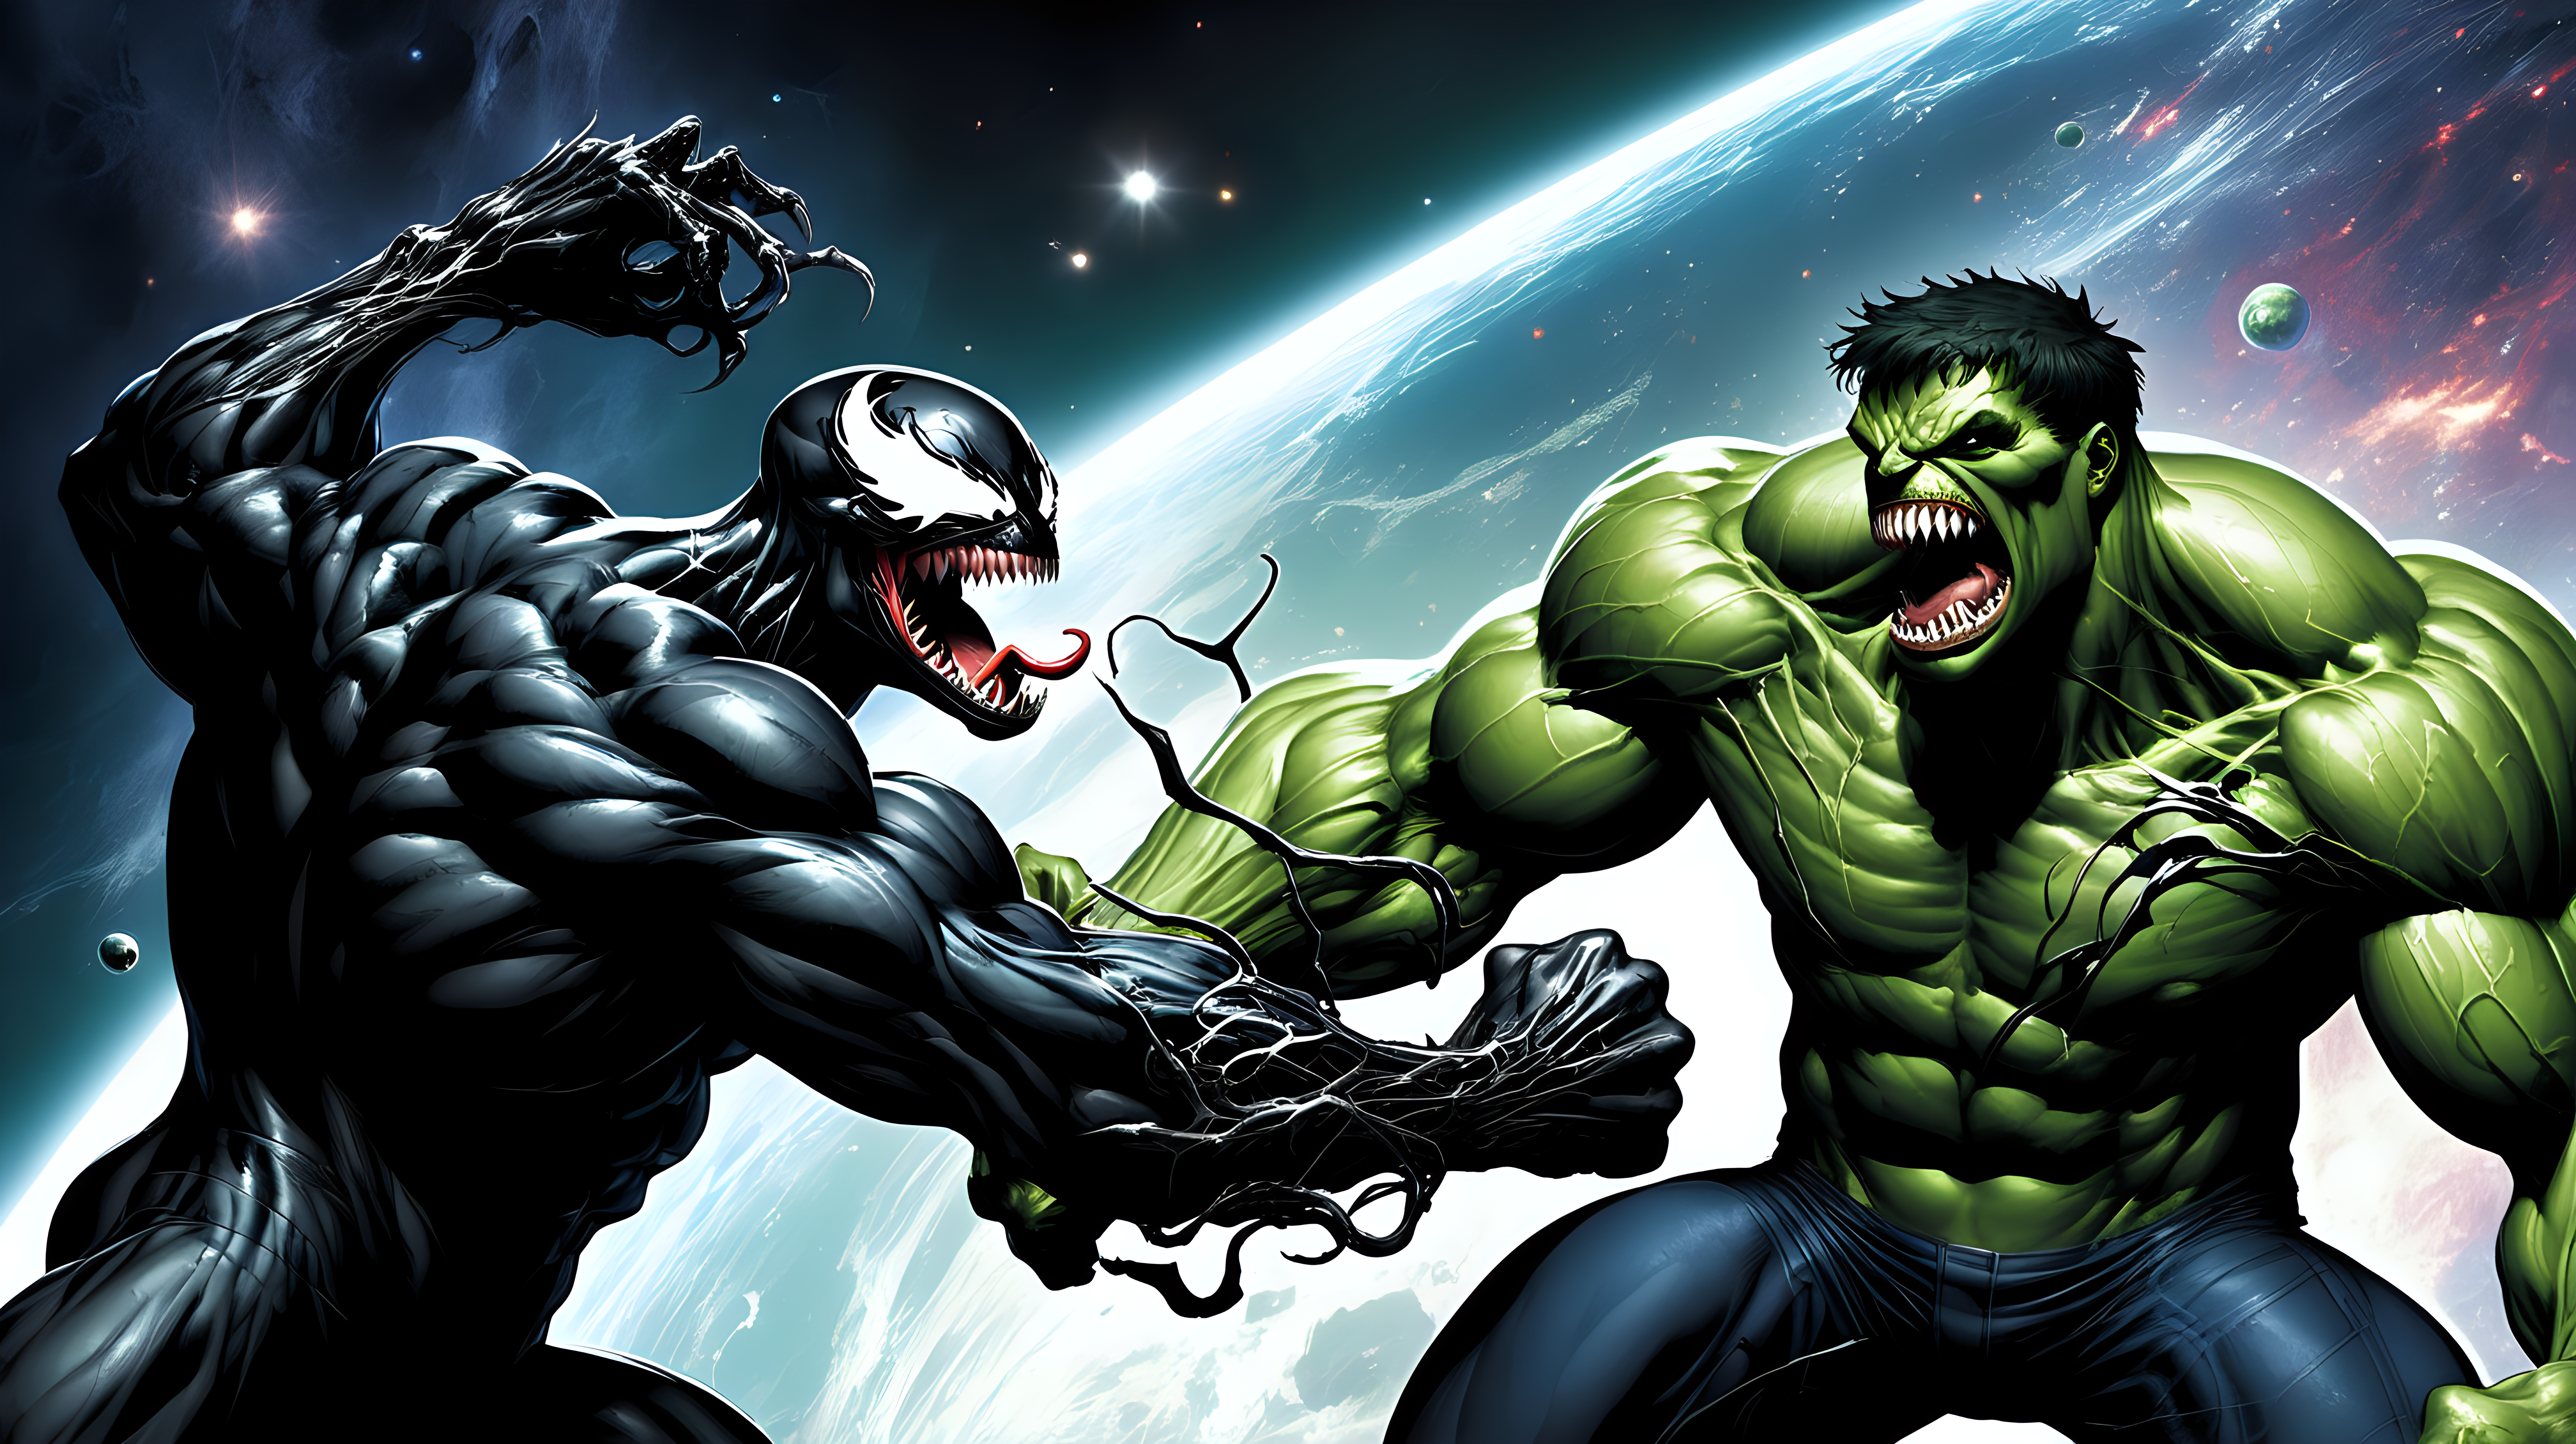 Venom fights the Hulk in space